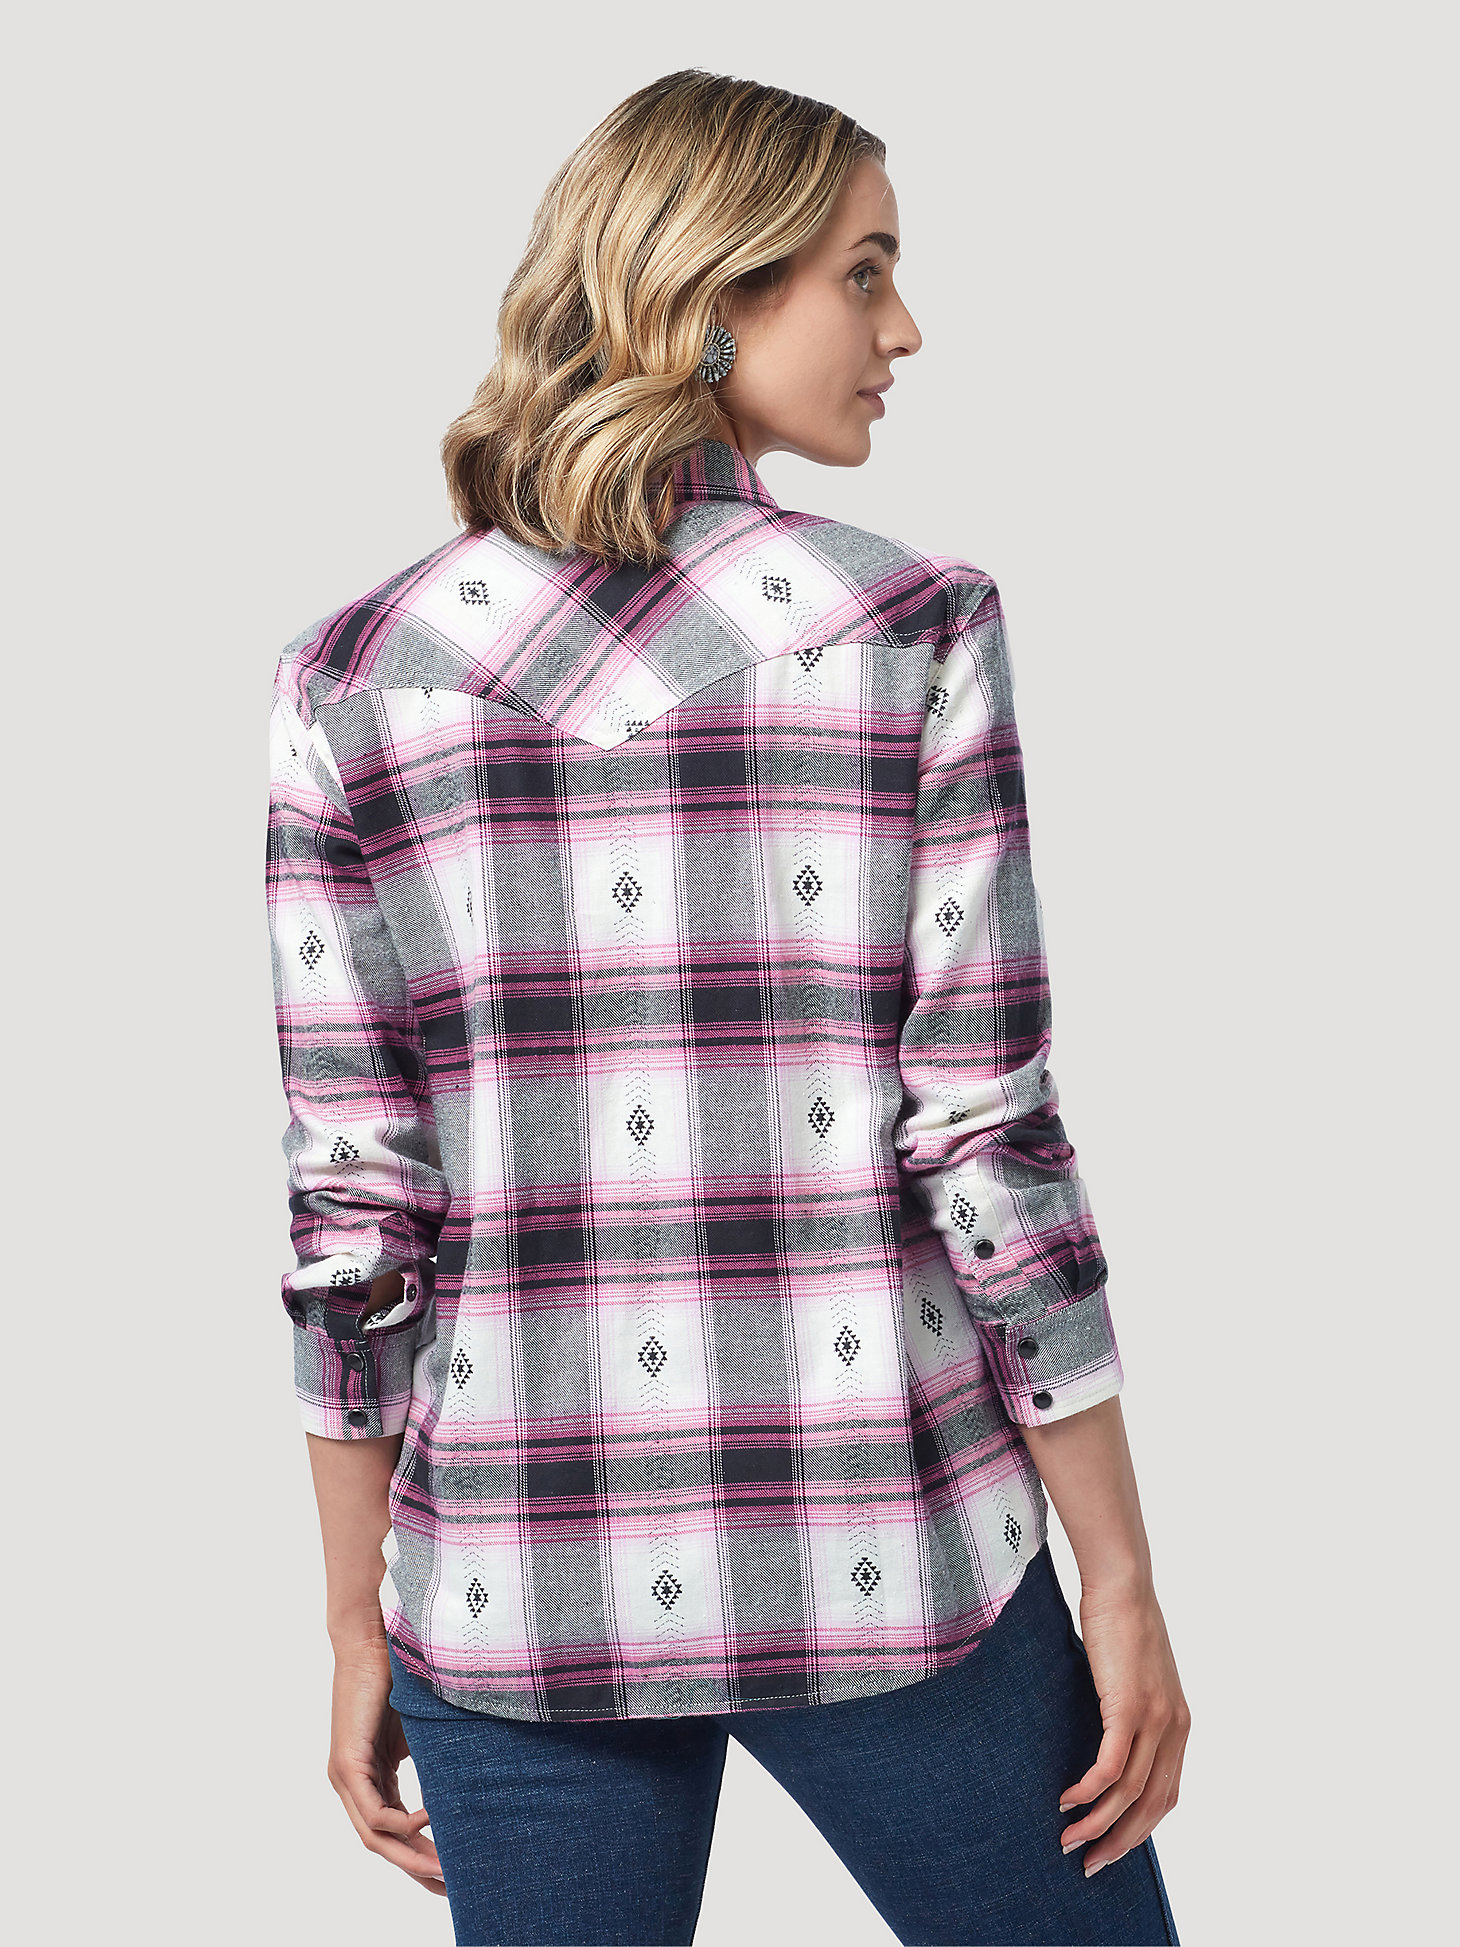 Women's Wrangler Retro® Long Sleeve Boyfriend Fit Flannel Plaid Shirt in Wren alternative view 3